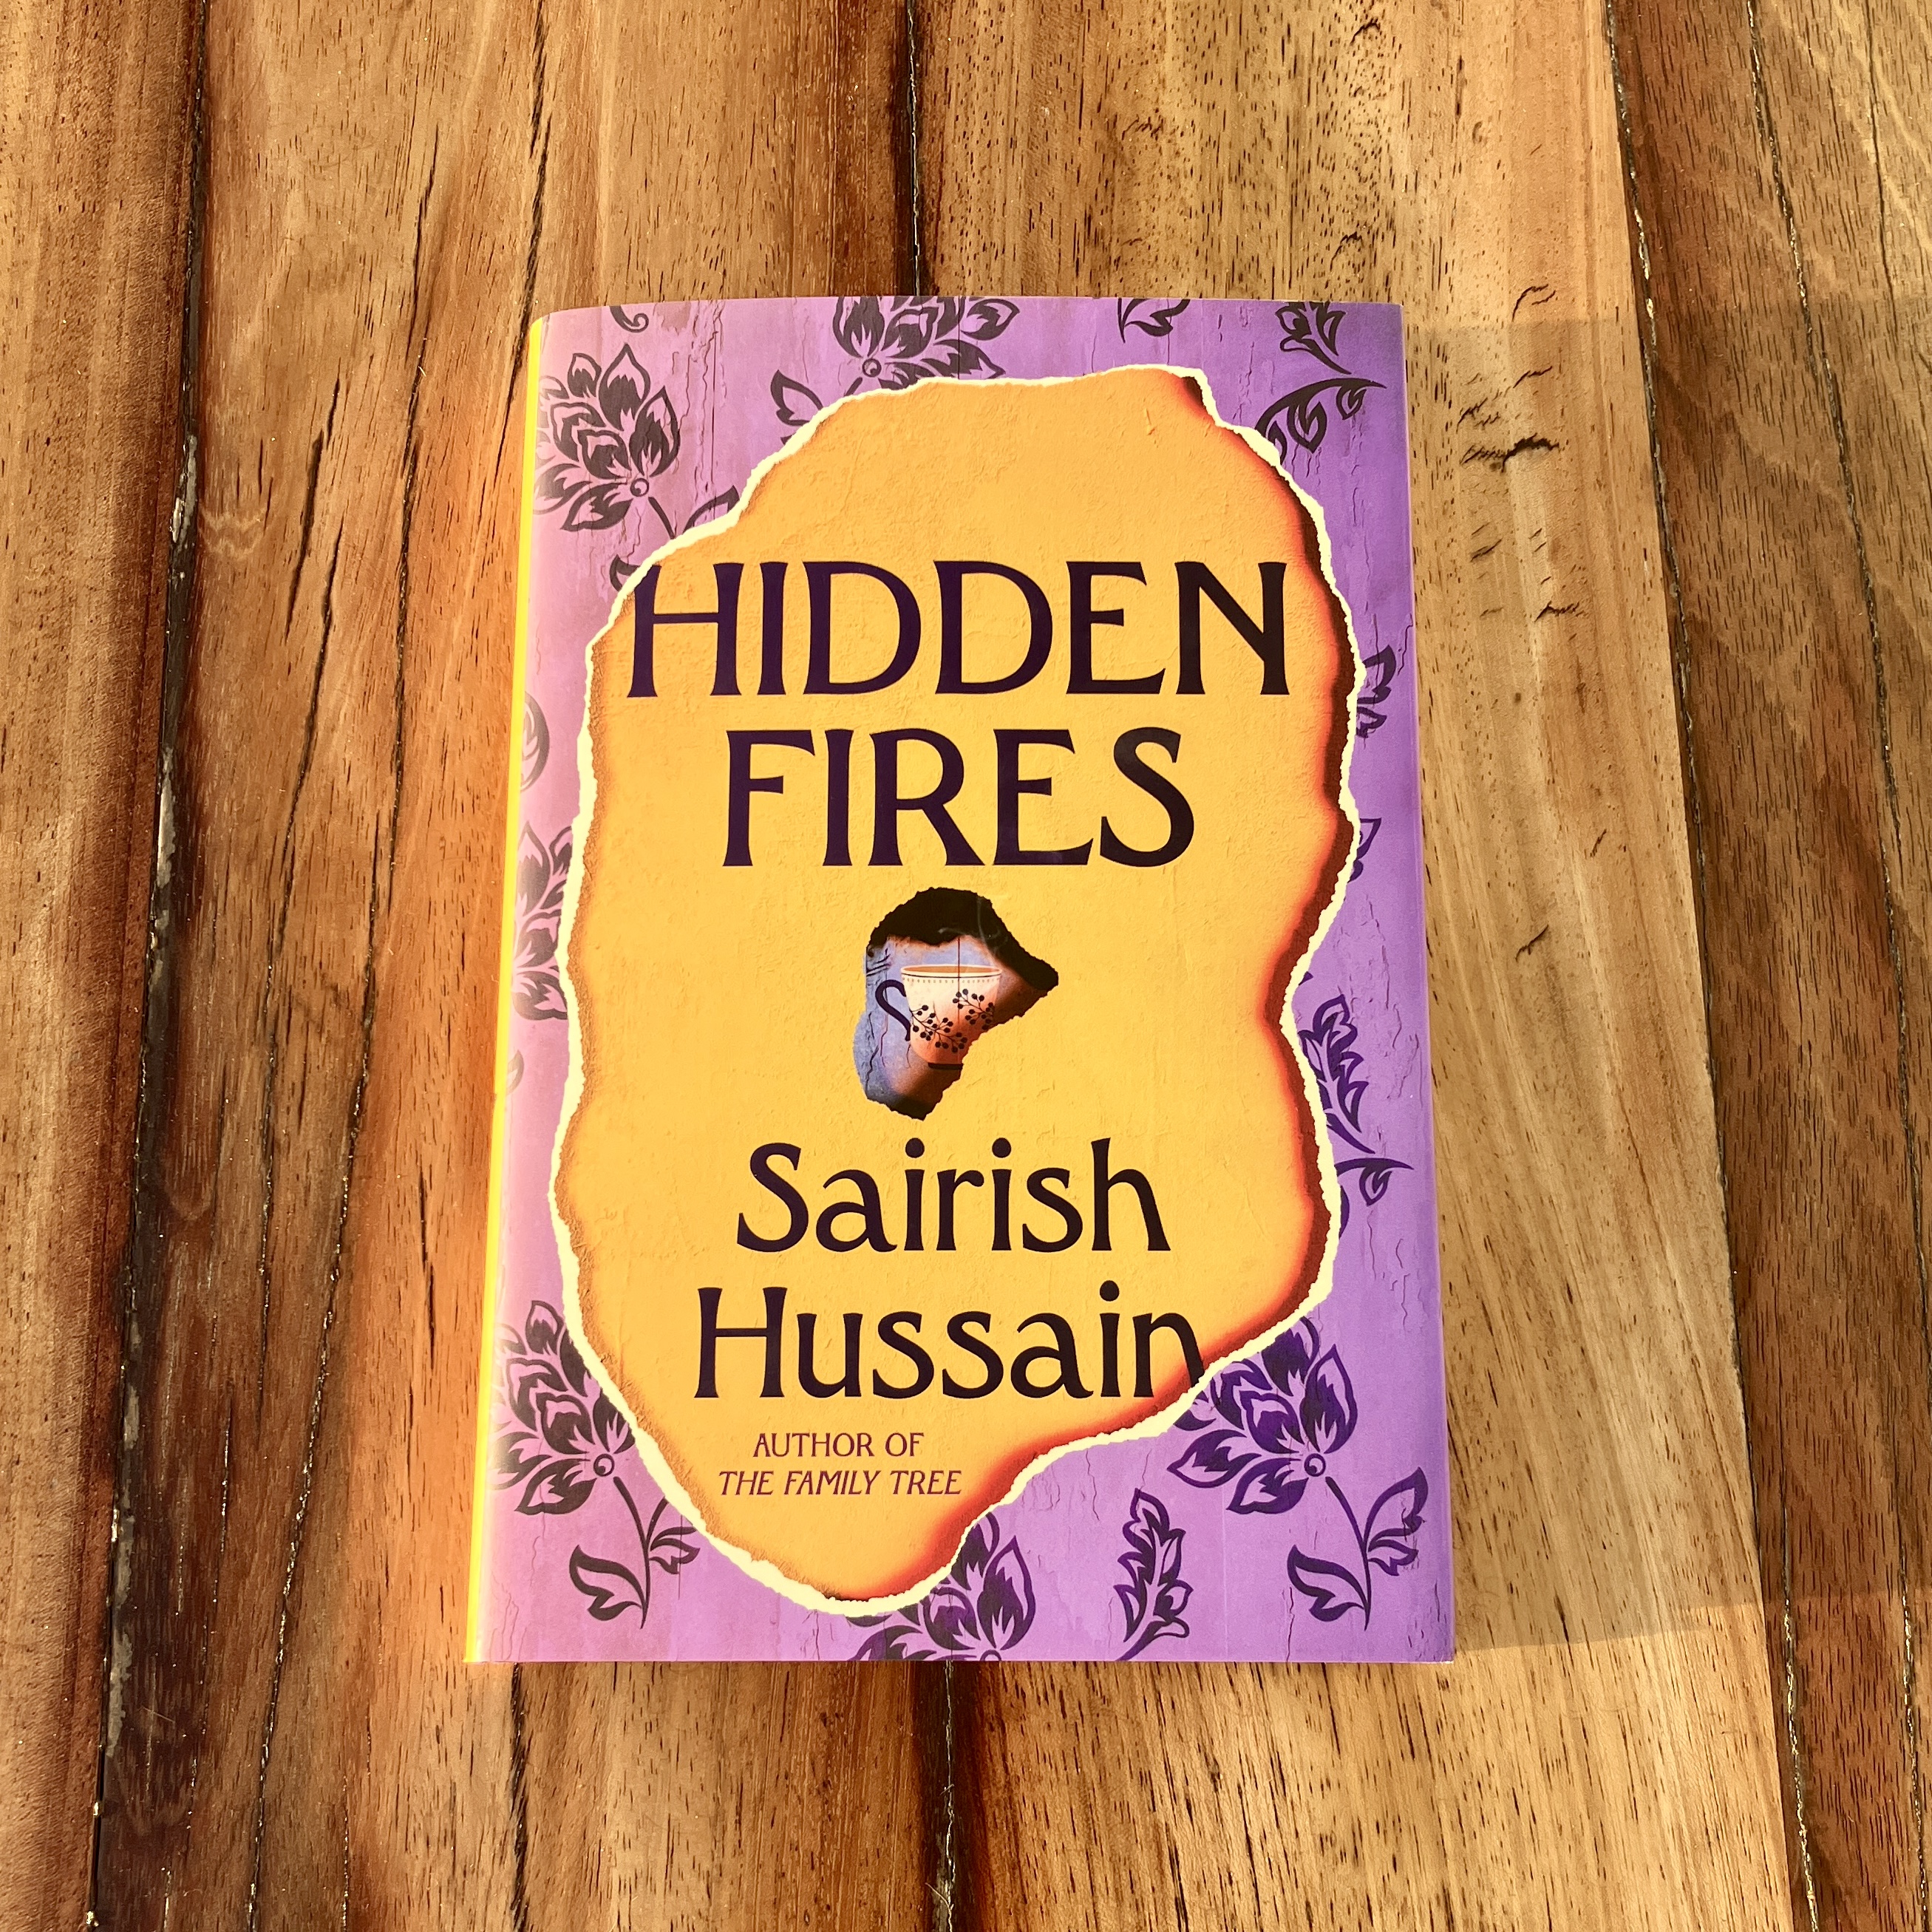 Book review – Sairish Hussain – “The Family Tree”